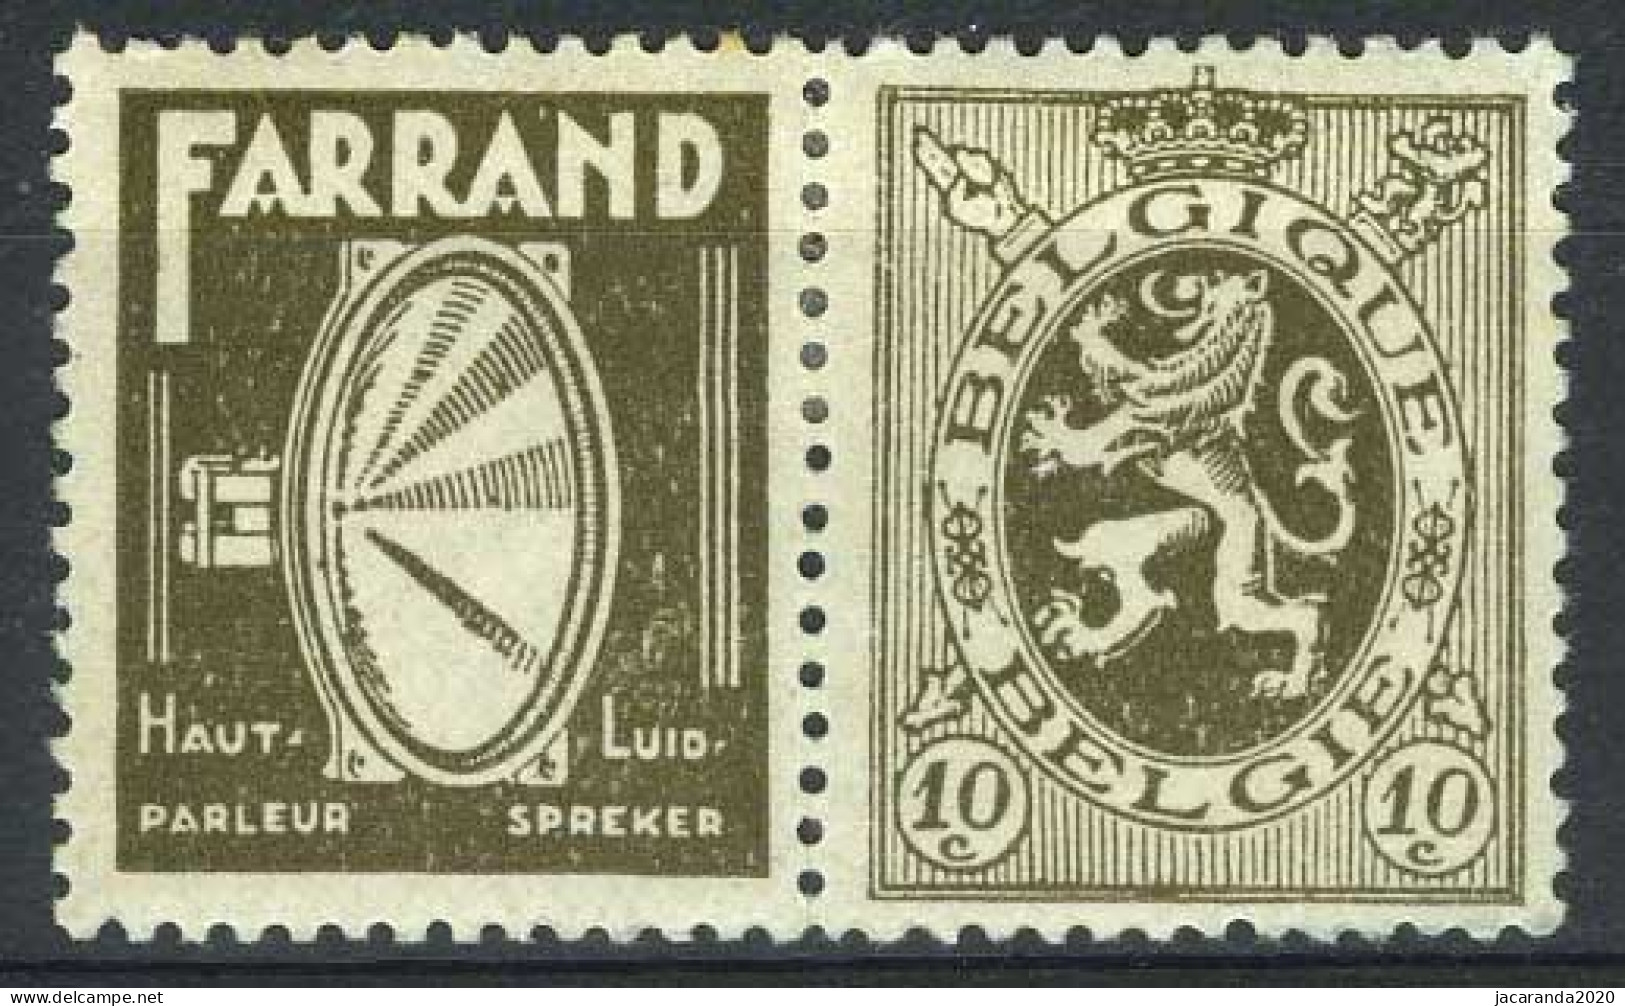 België PU9 * - Farrand - Mint